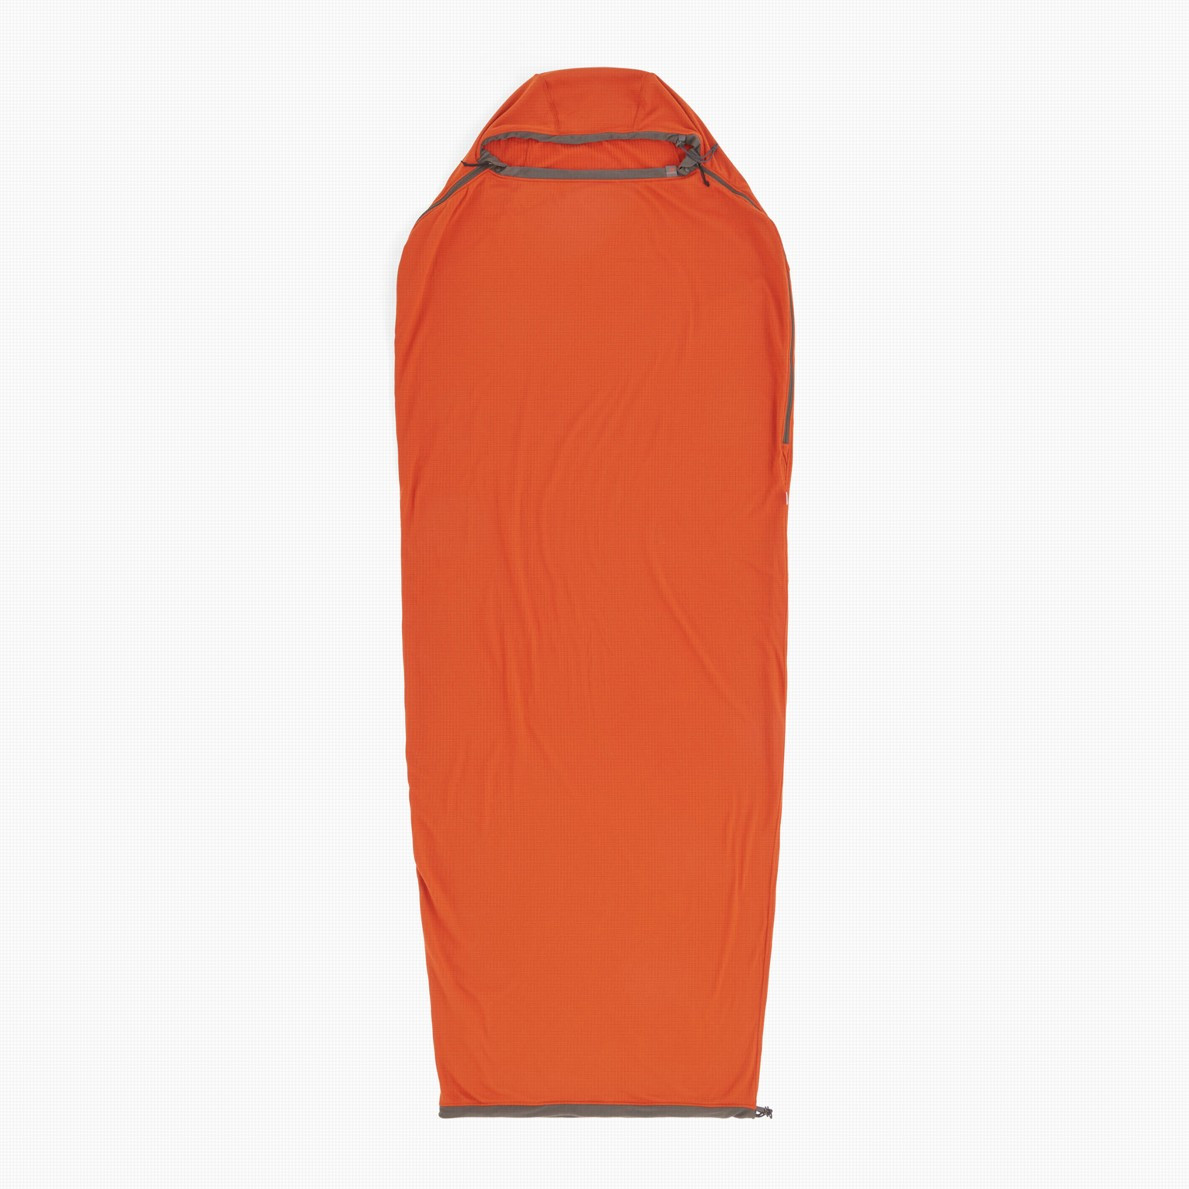 Vložka do spacáku Sea to Summit Reactor Fleece Liner Mummy Standard Barva: červená/oranžová